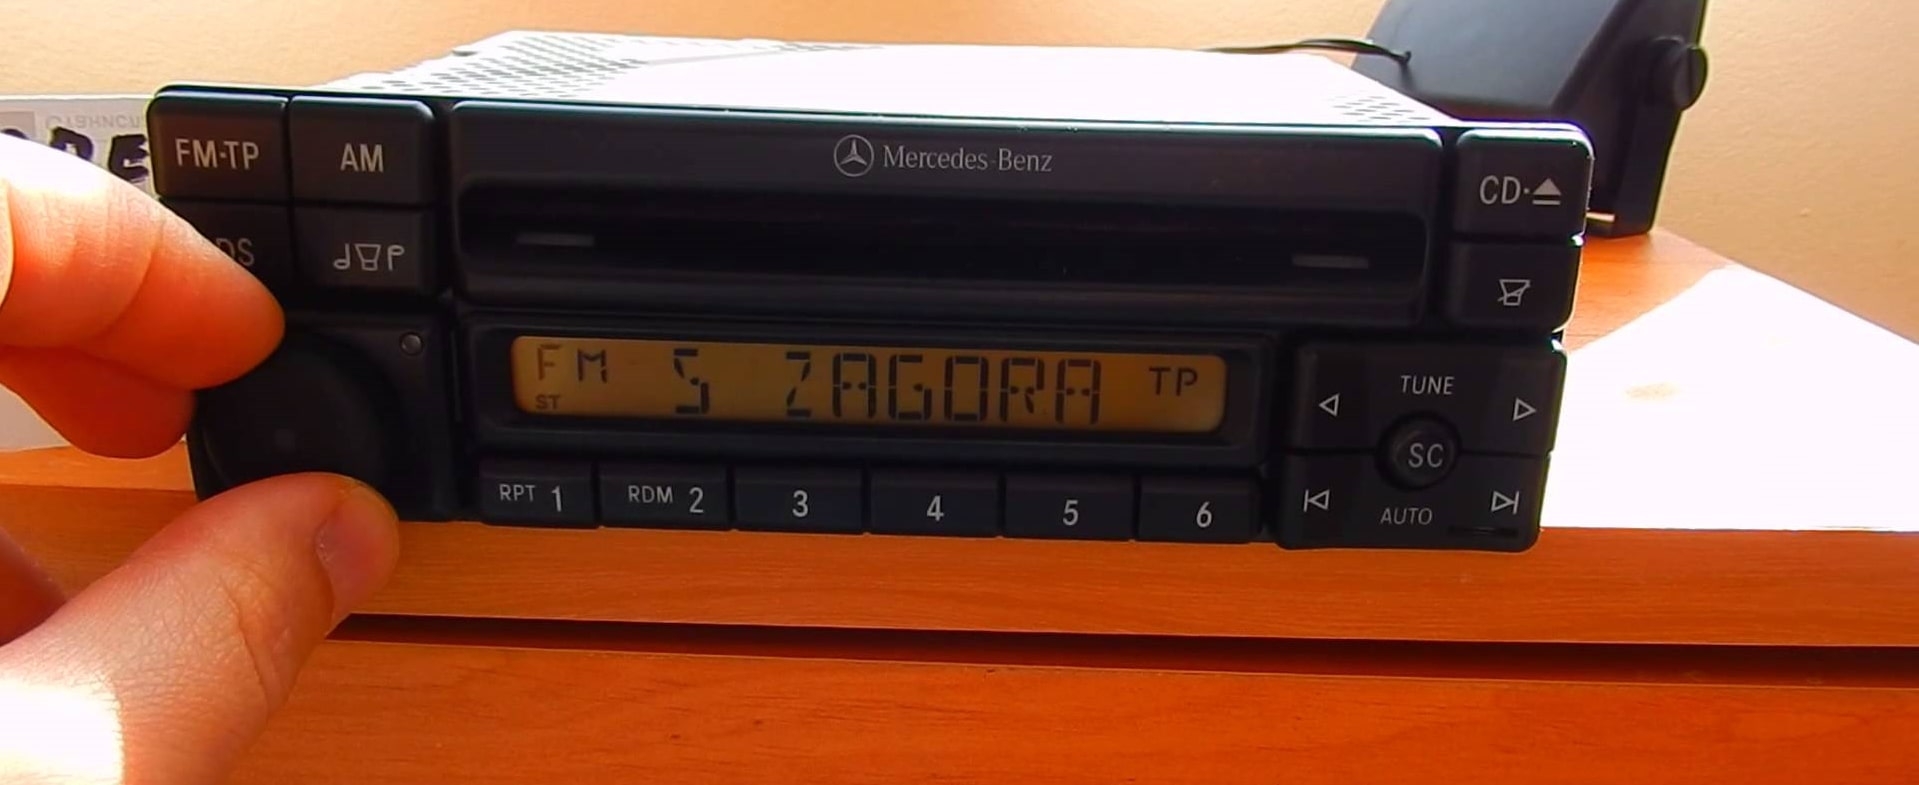 Mercedes CLK Radio Code